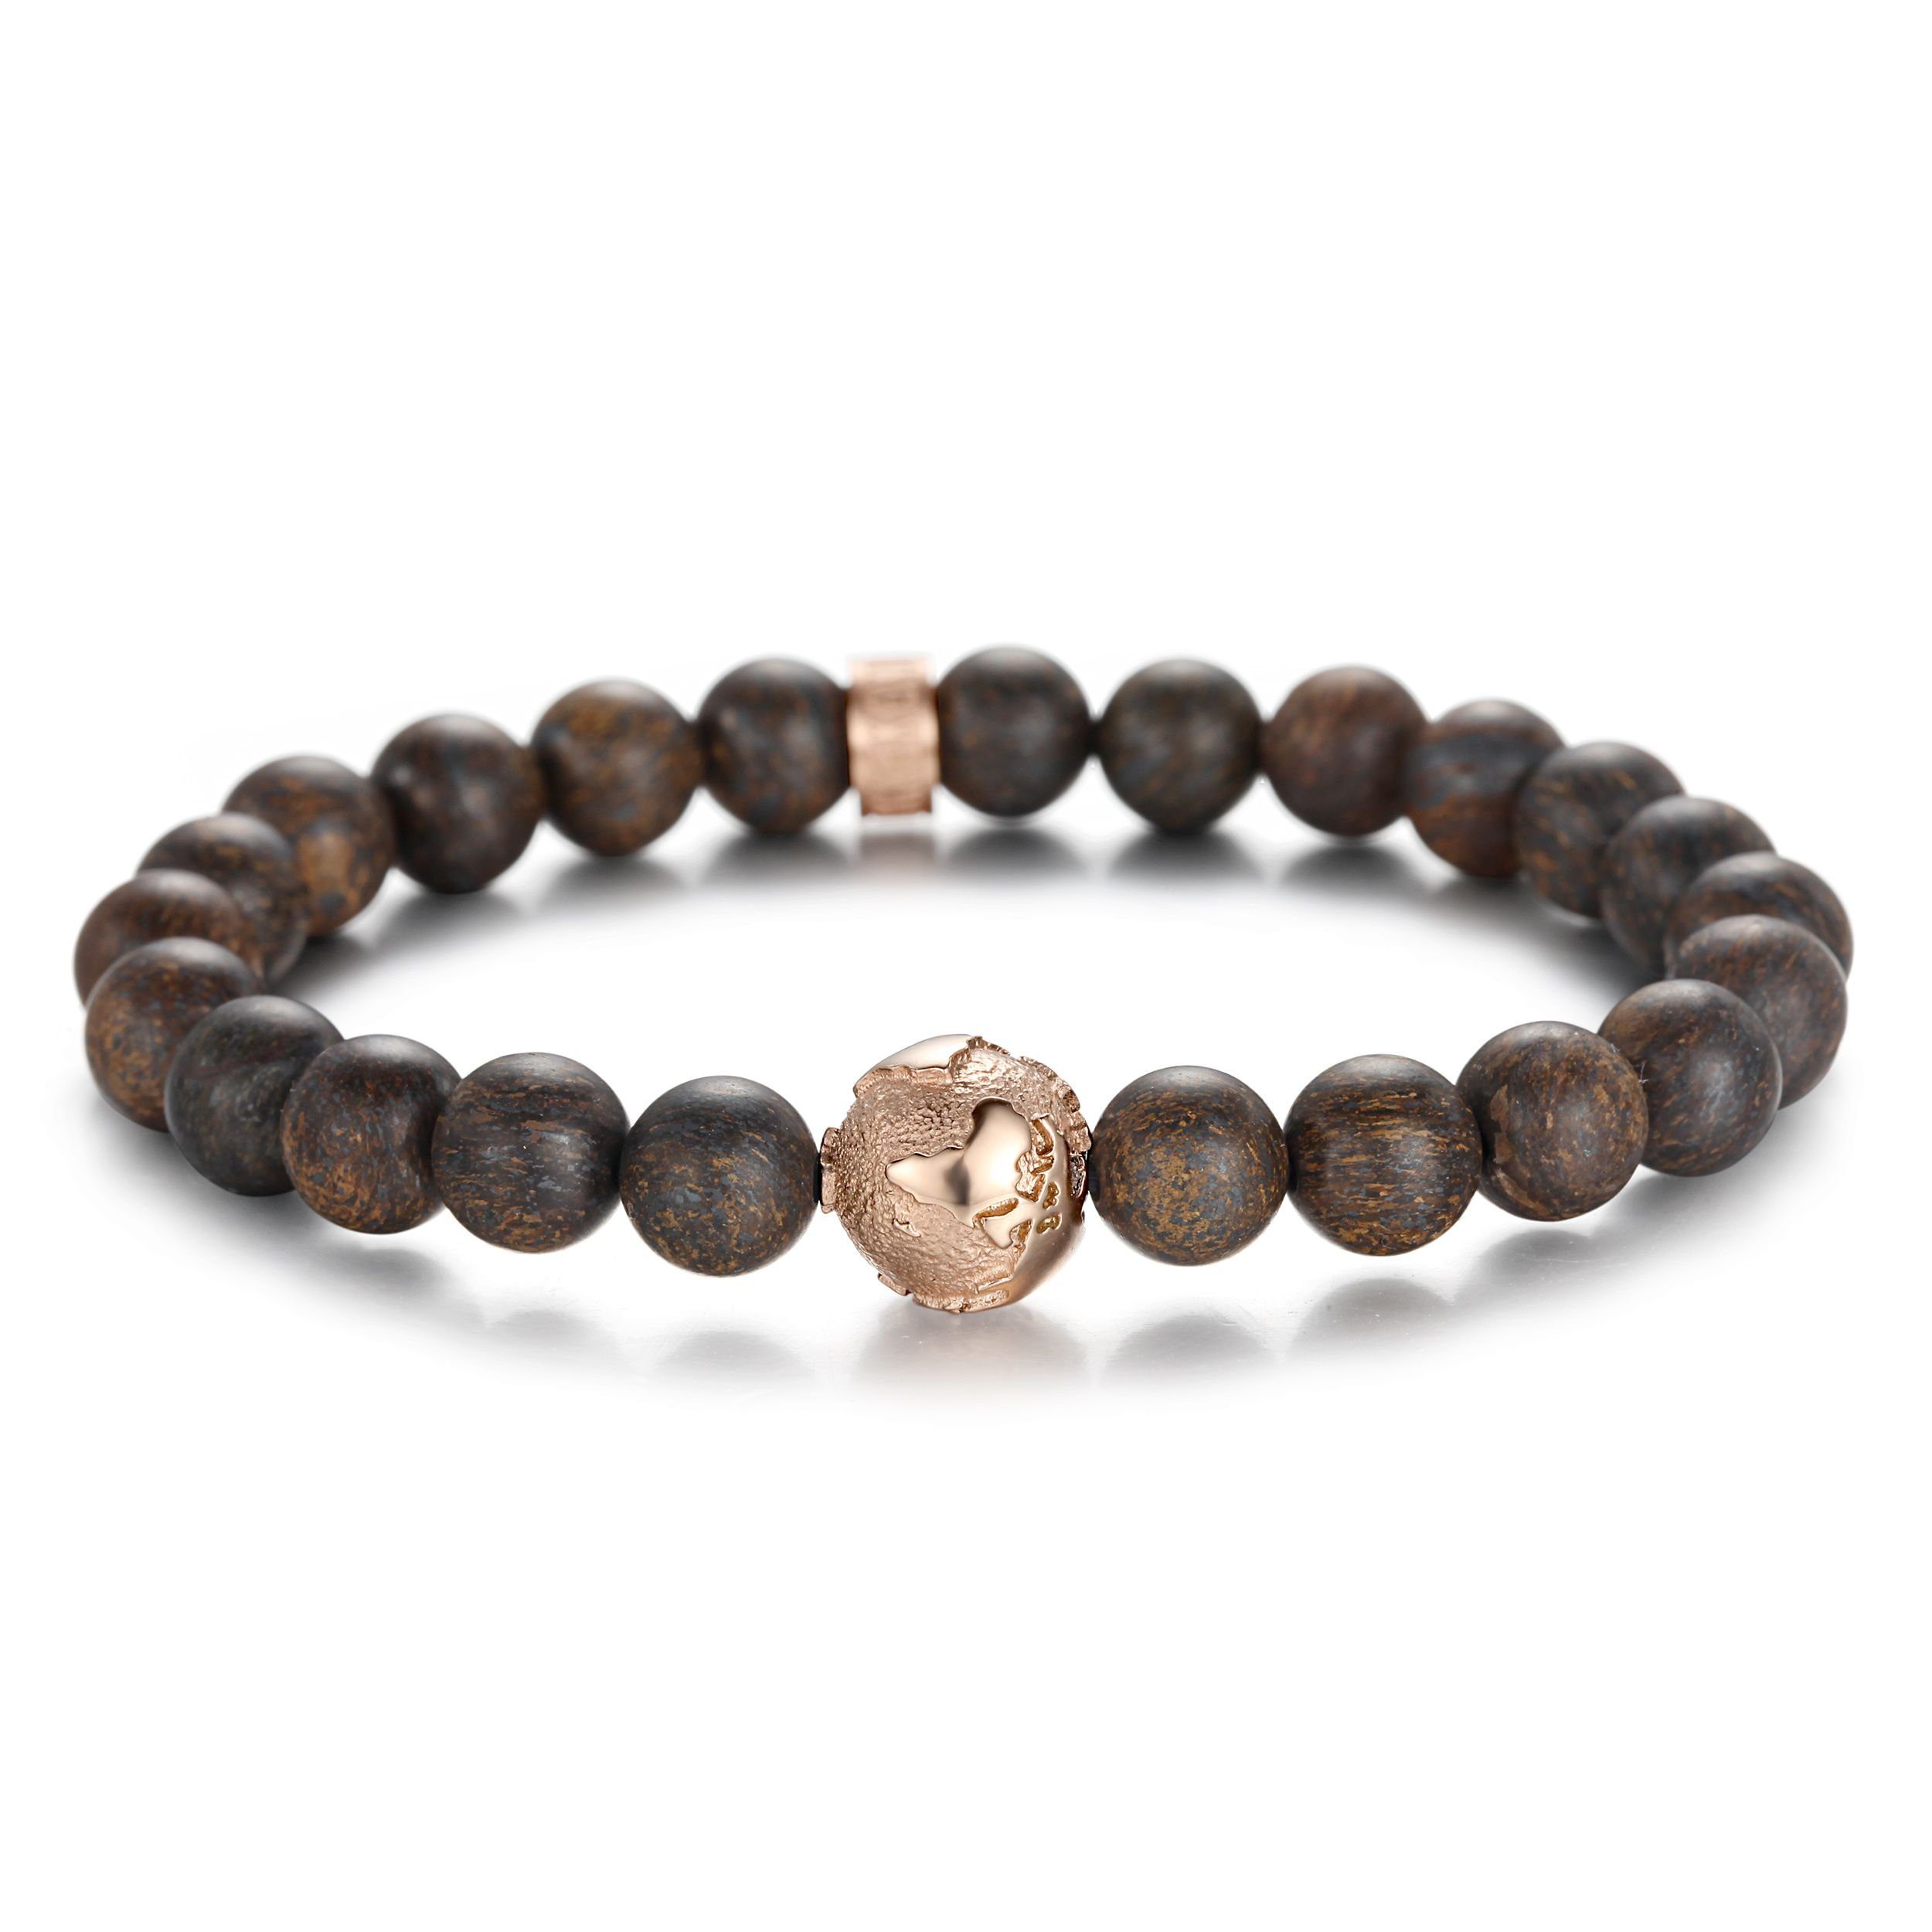 Kingka Armband "PLANET EARTH" Titan Erdkugel Beads Armband mit Bronzite Steinen